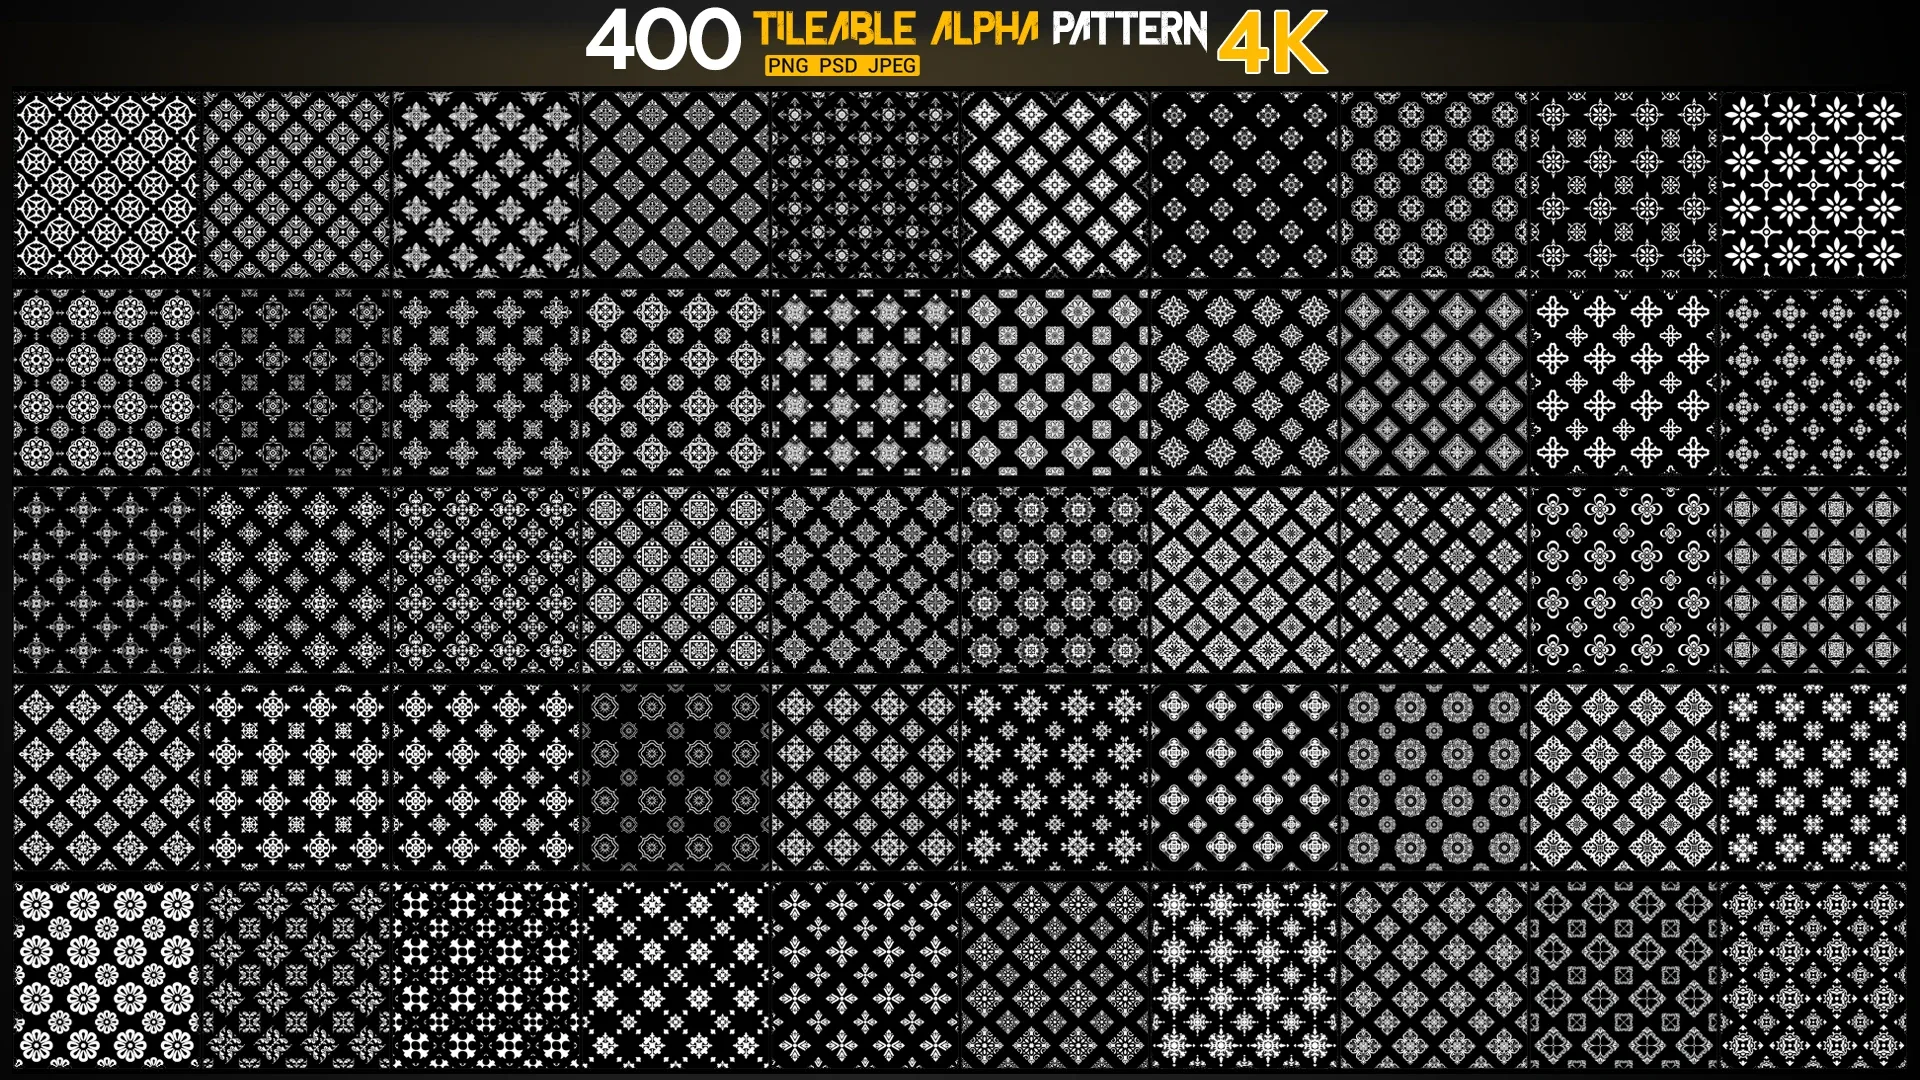 400 | Flowered and Geometrical Seamless Alpha Patterns 4K | Png + Psd +Jpg